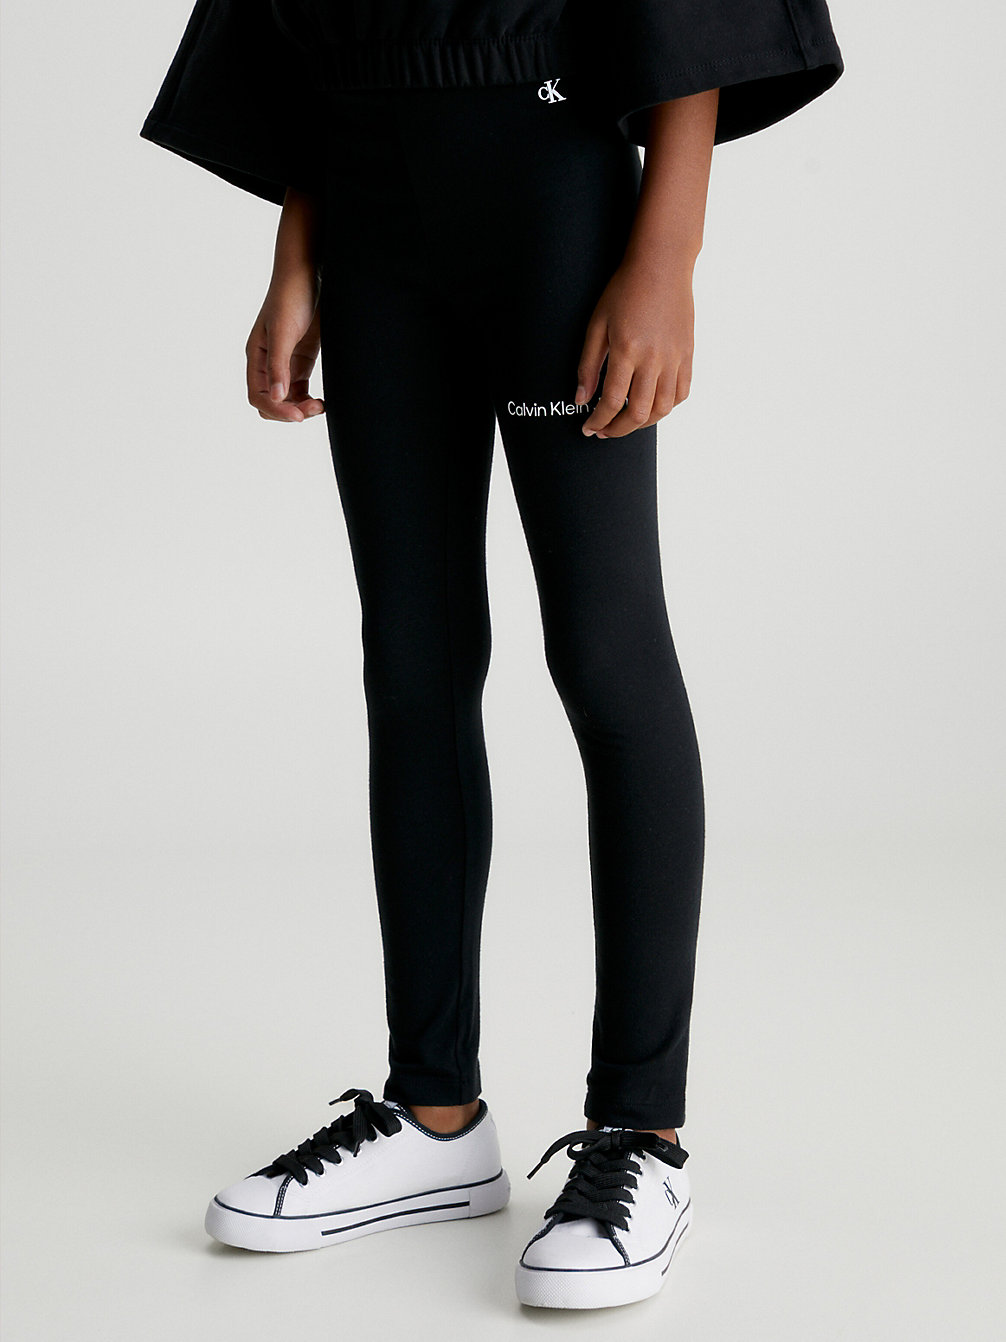 CK BLACK Legging Slim undefined filles Calvin Klein